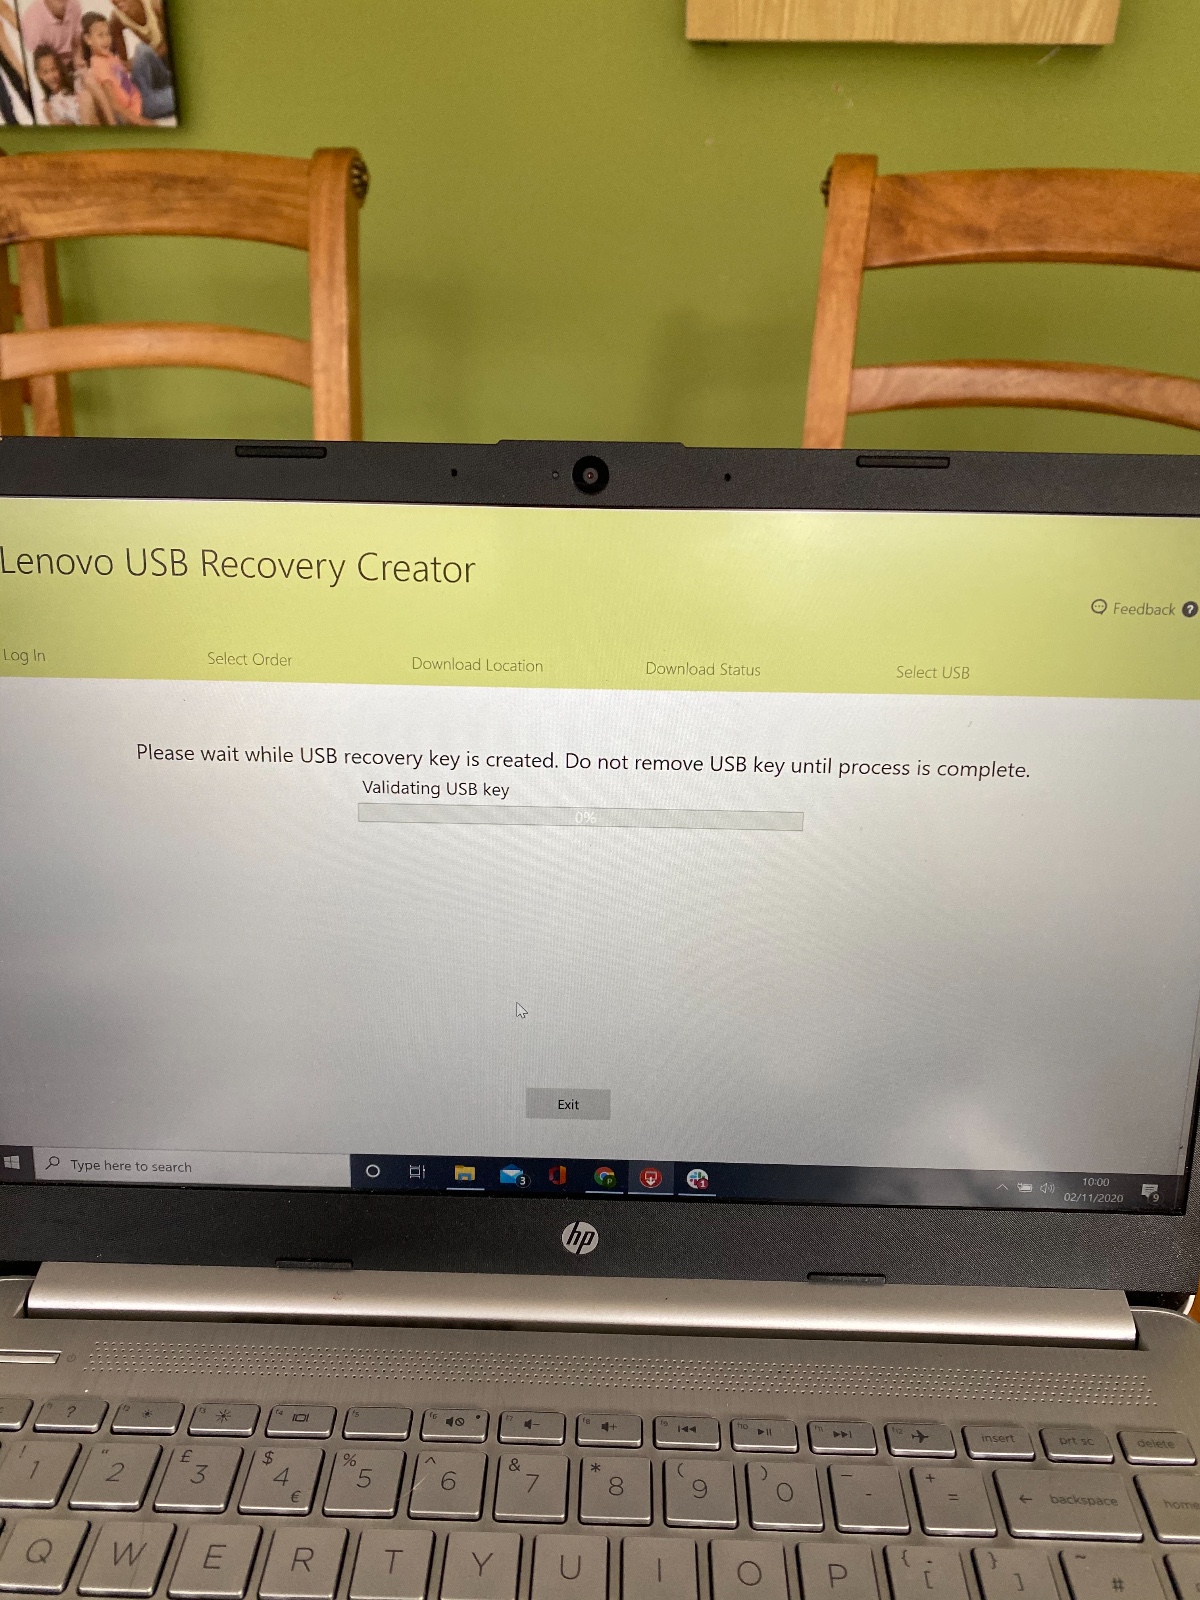 USB-recovery-creator - English Community - LENOVO COMMUNITY